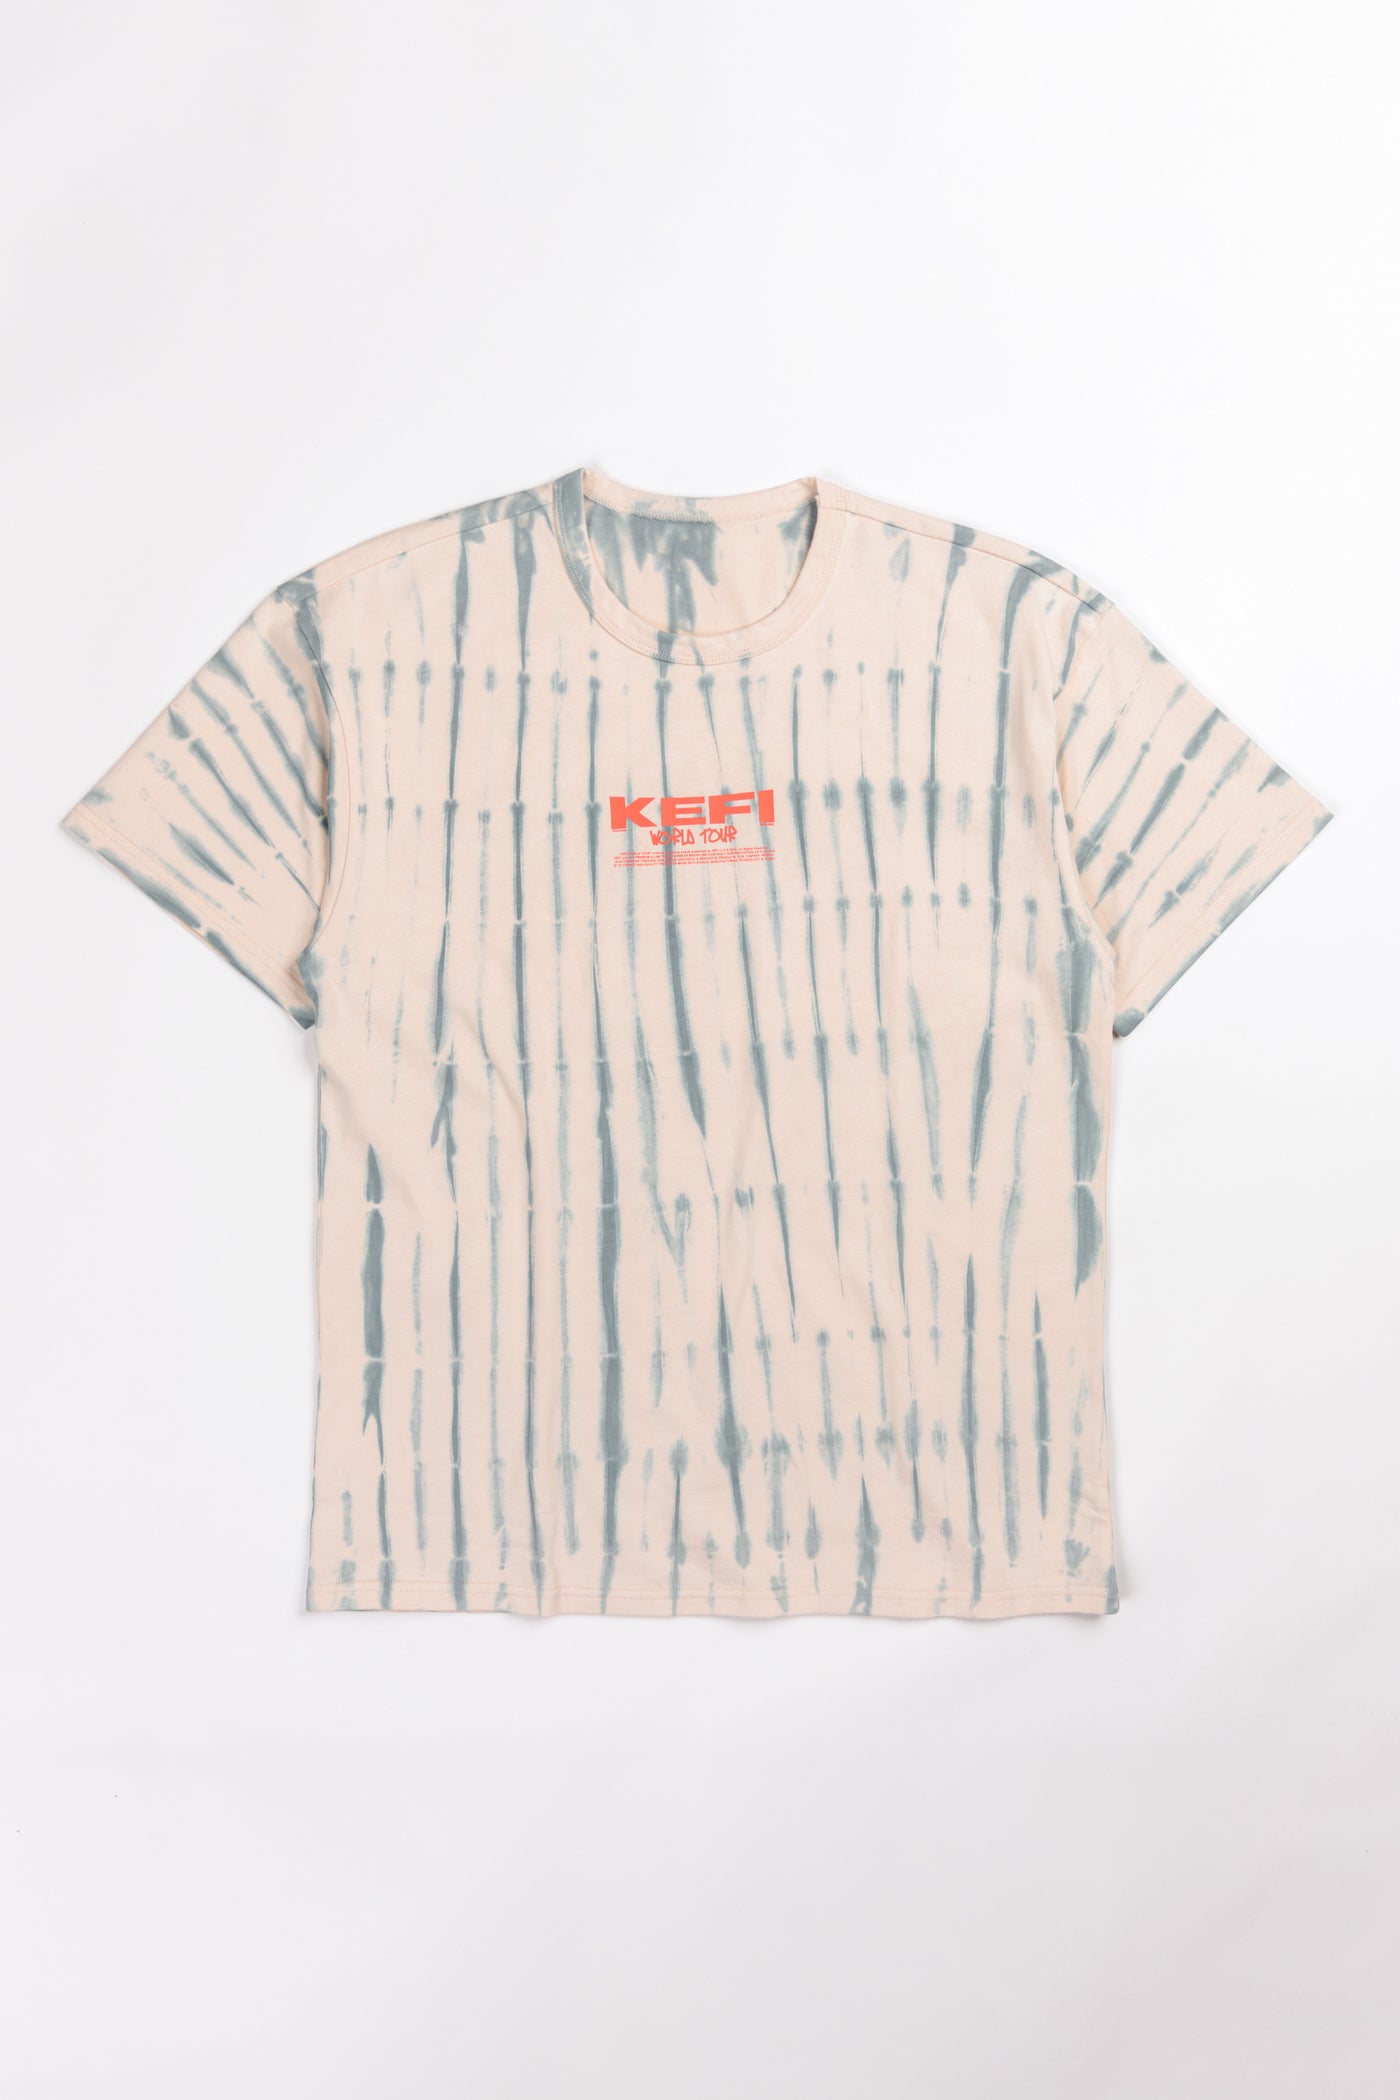 World Tour T-Shirt - Coral Sand Tie-Dye